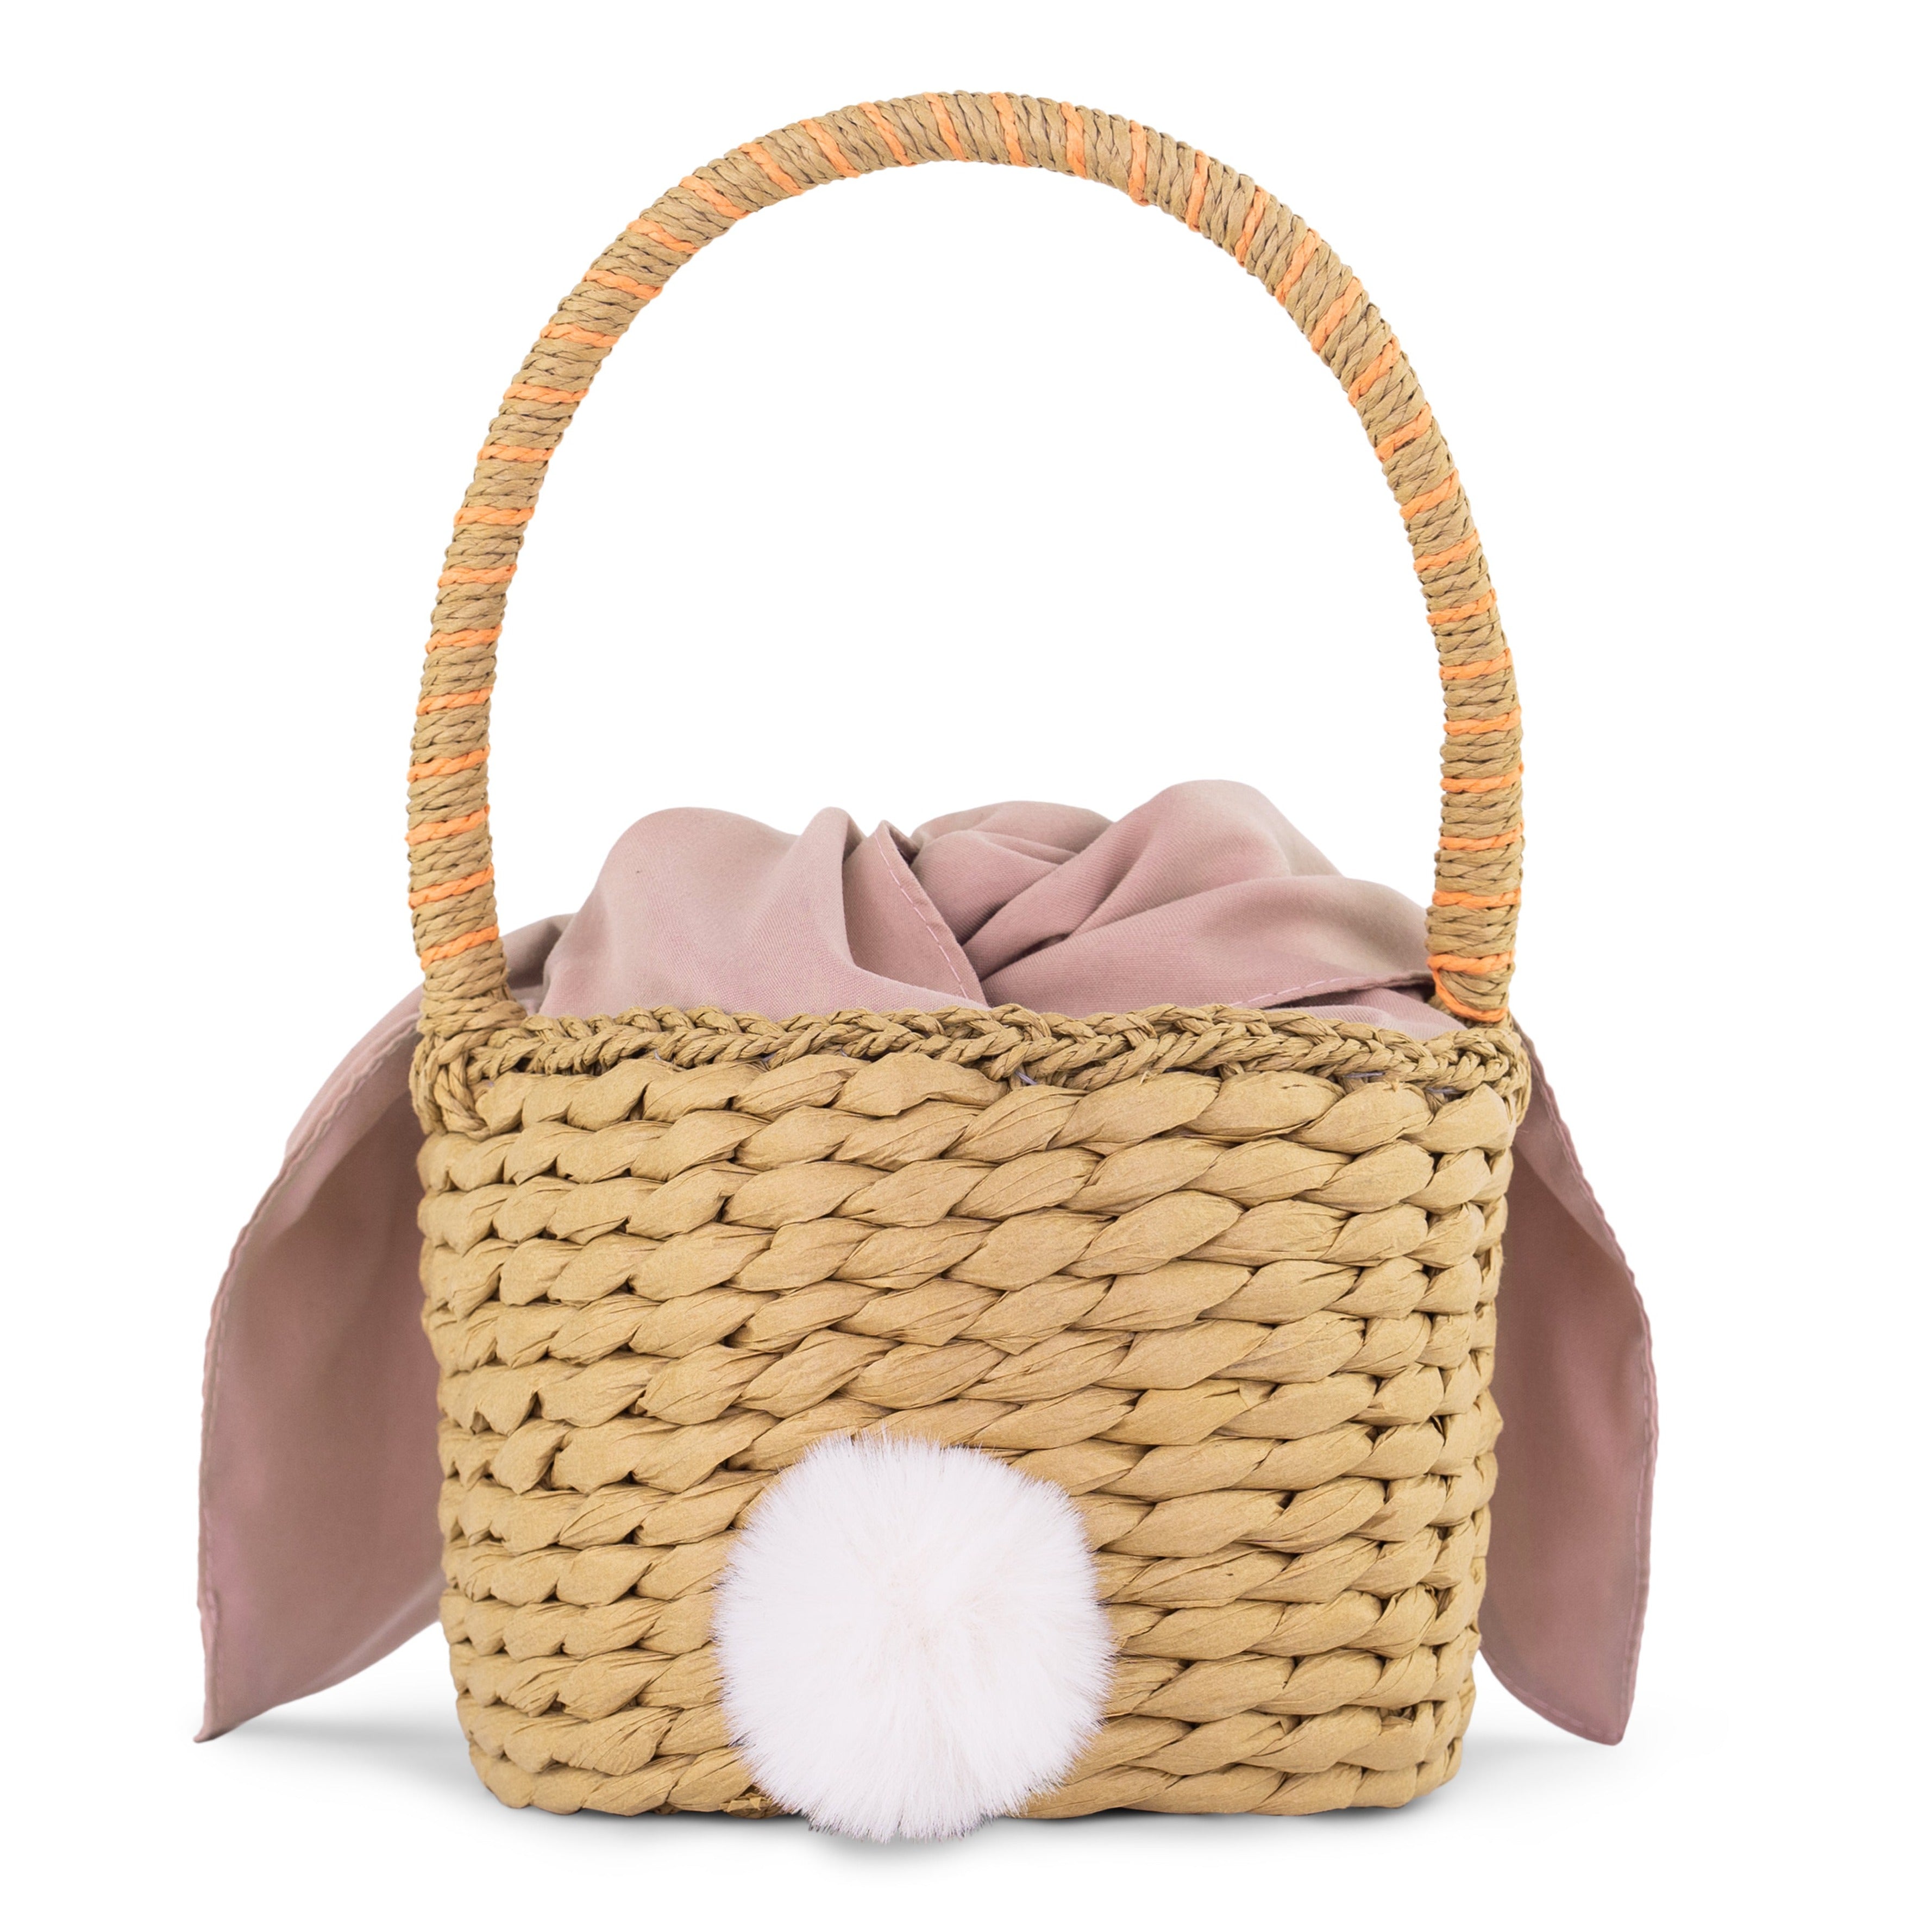 Partydeco: Bunny Bunny Basket Baby basket